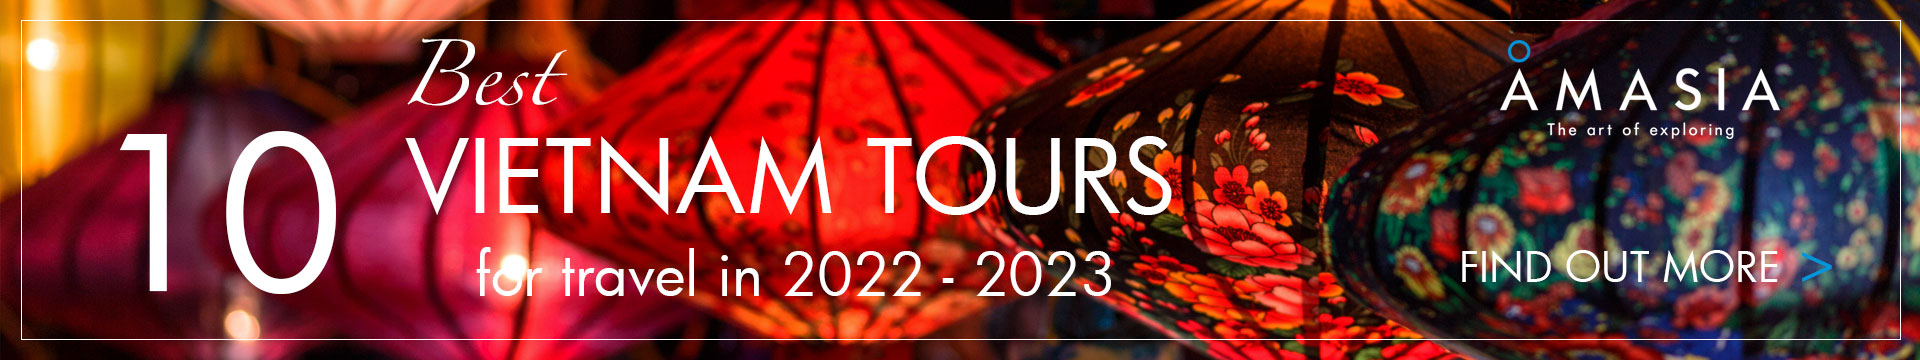 Vietnam Tours - Amasia Travel